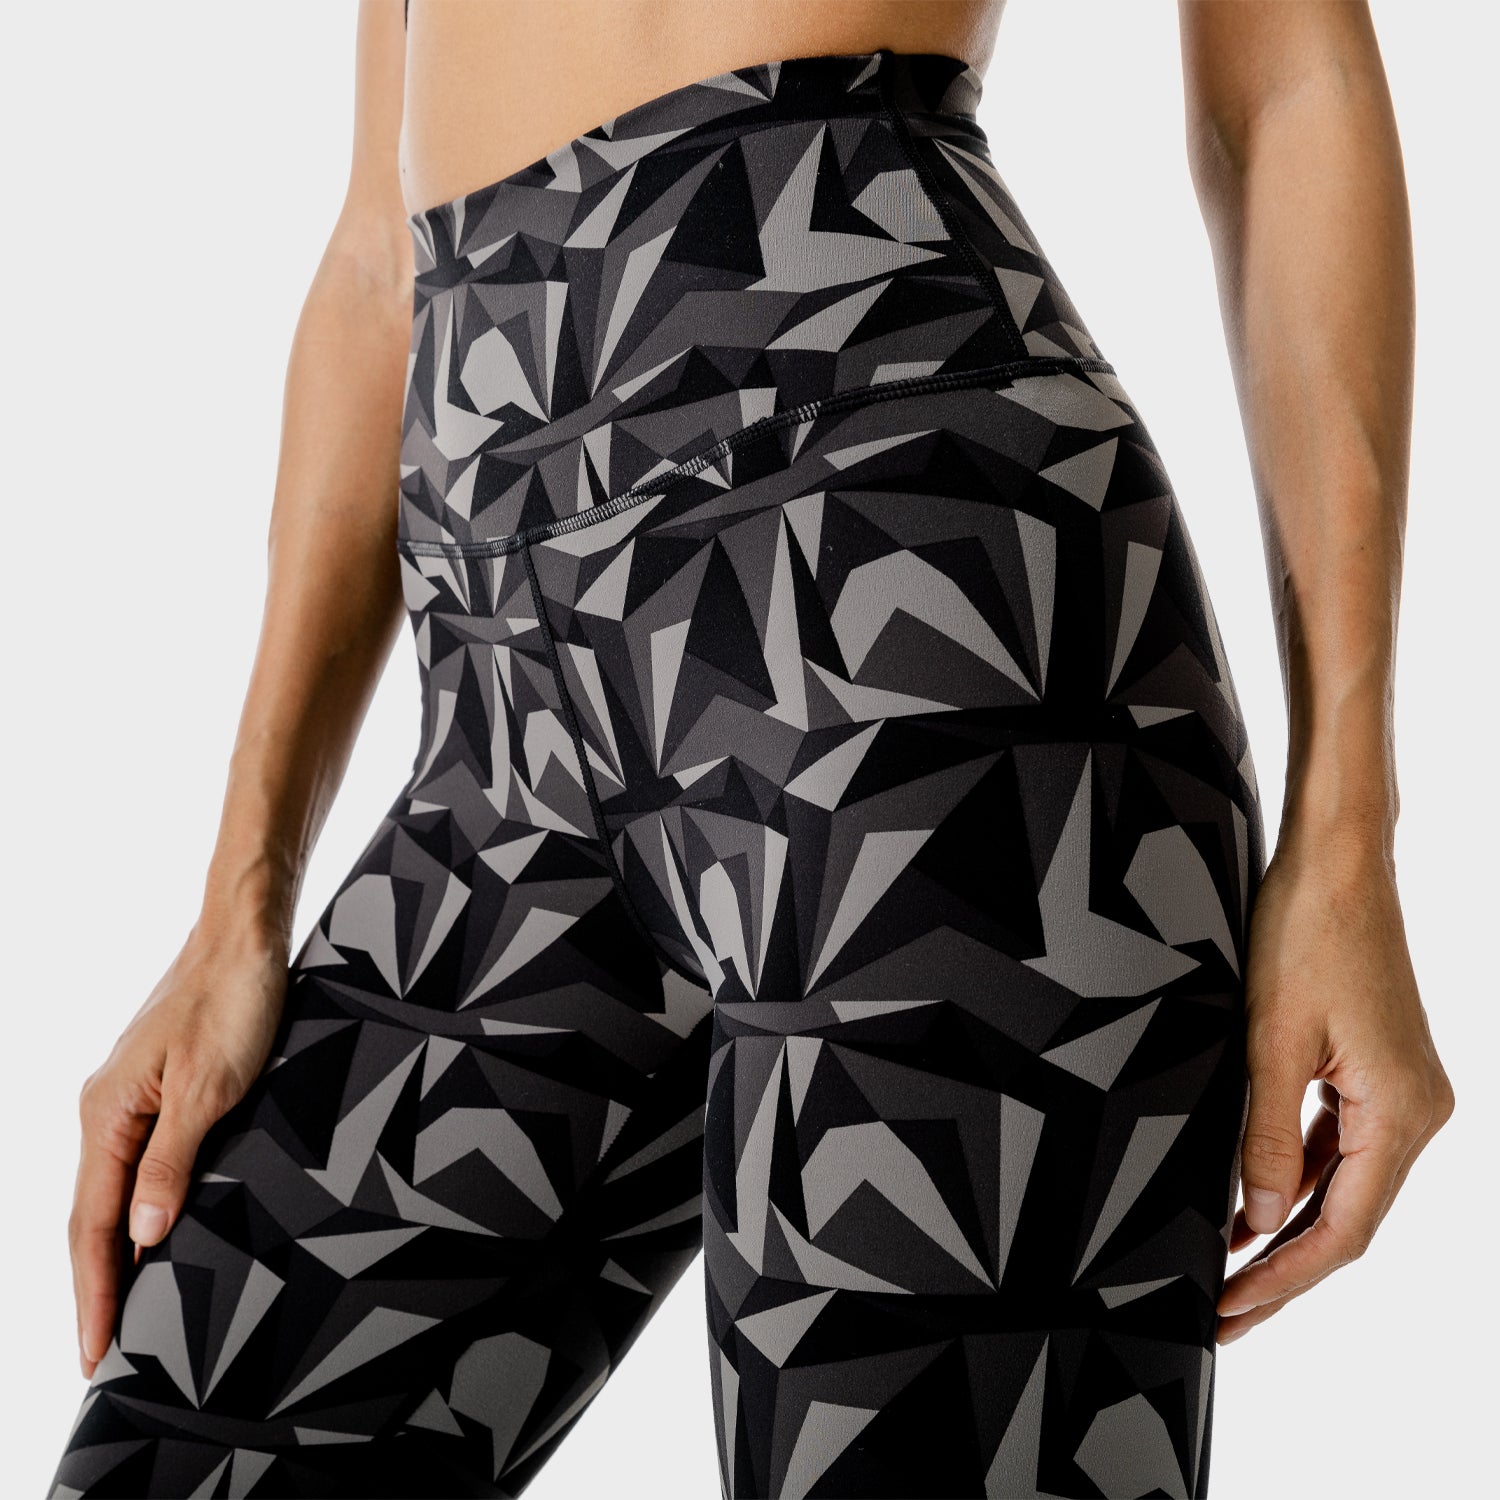 squatwolf-workout-clothes-lab-360-printed-leggings-black-print-gym-leggings-for-women